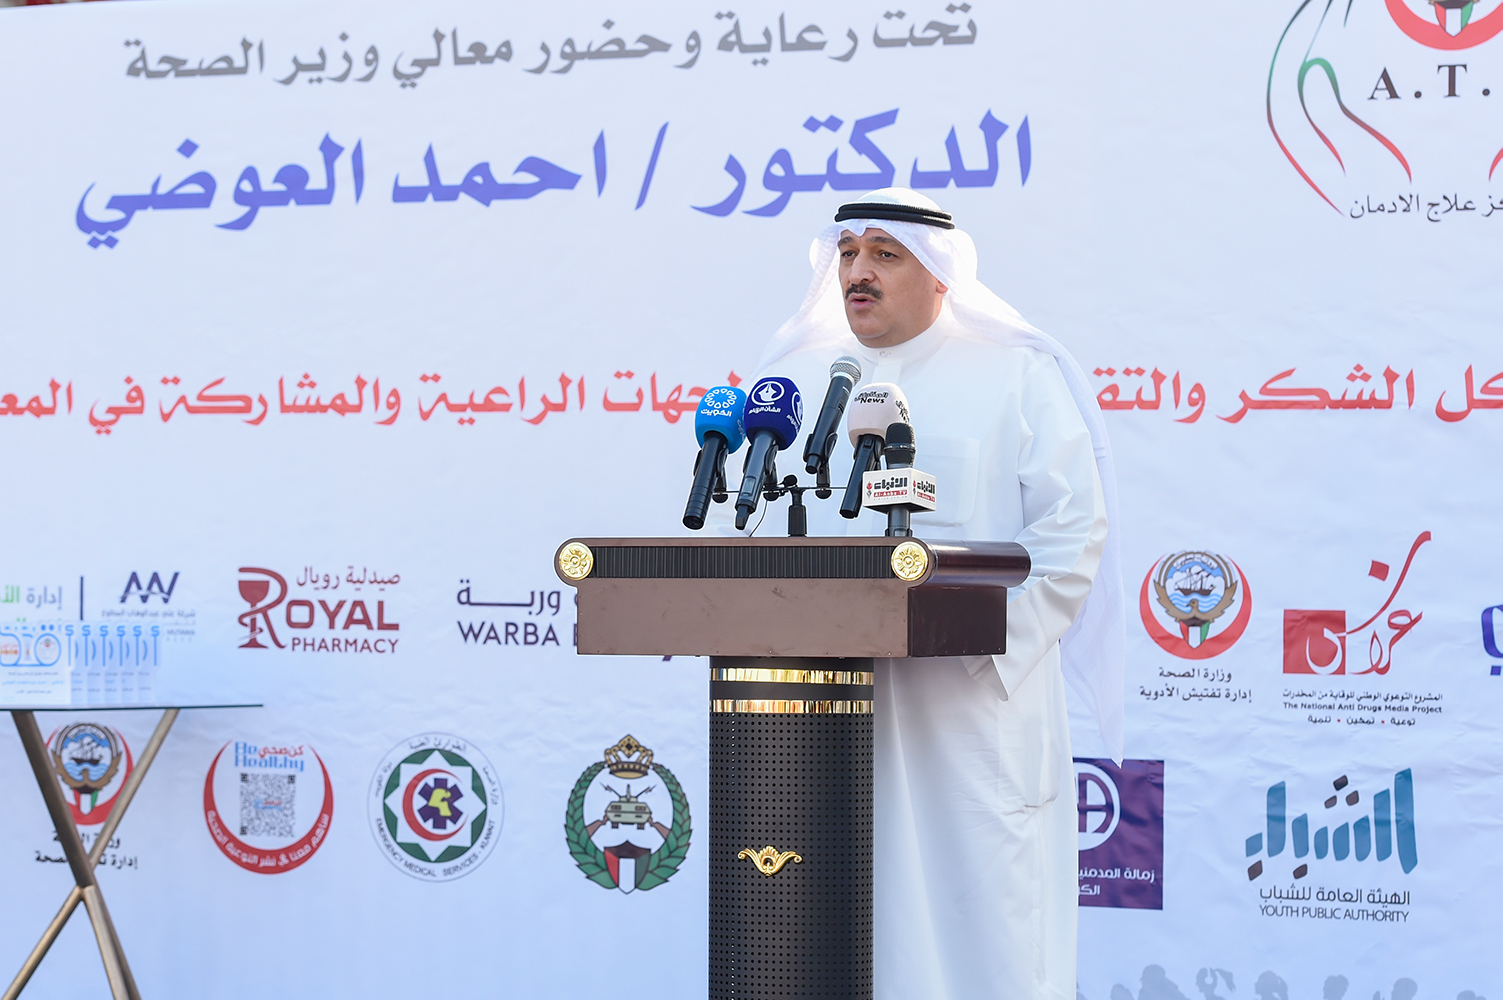 Kuwait's Minister of Health Dr Ahmad Al-Awadhi